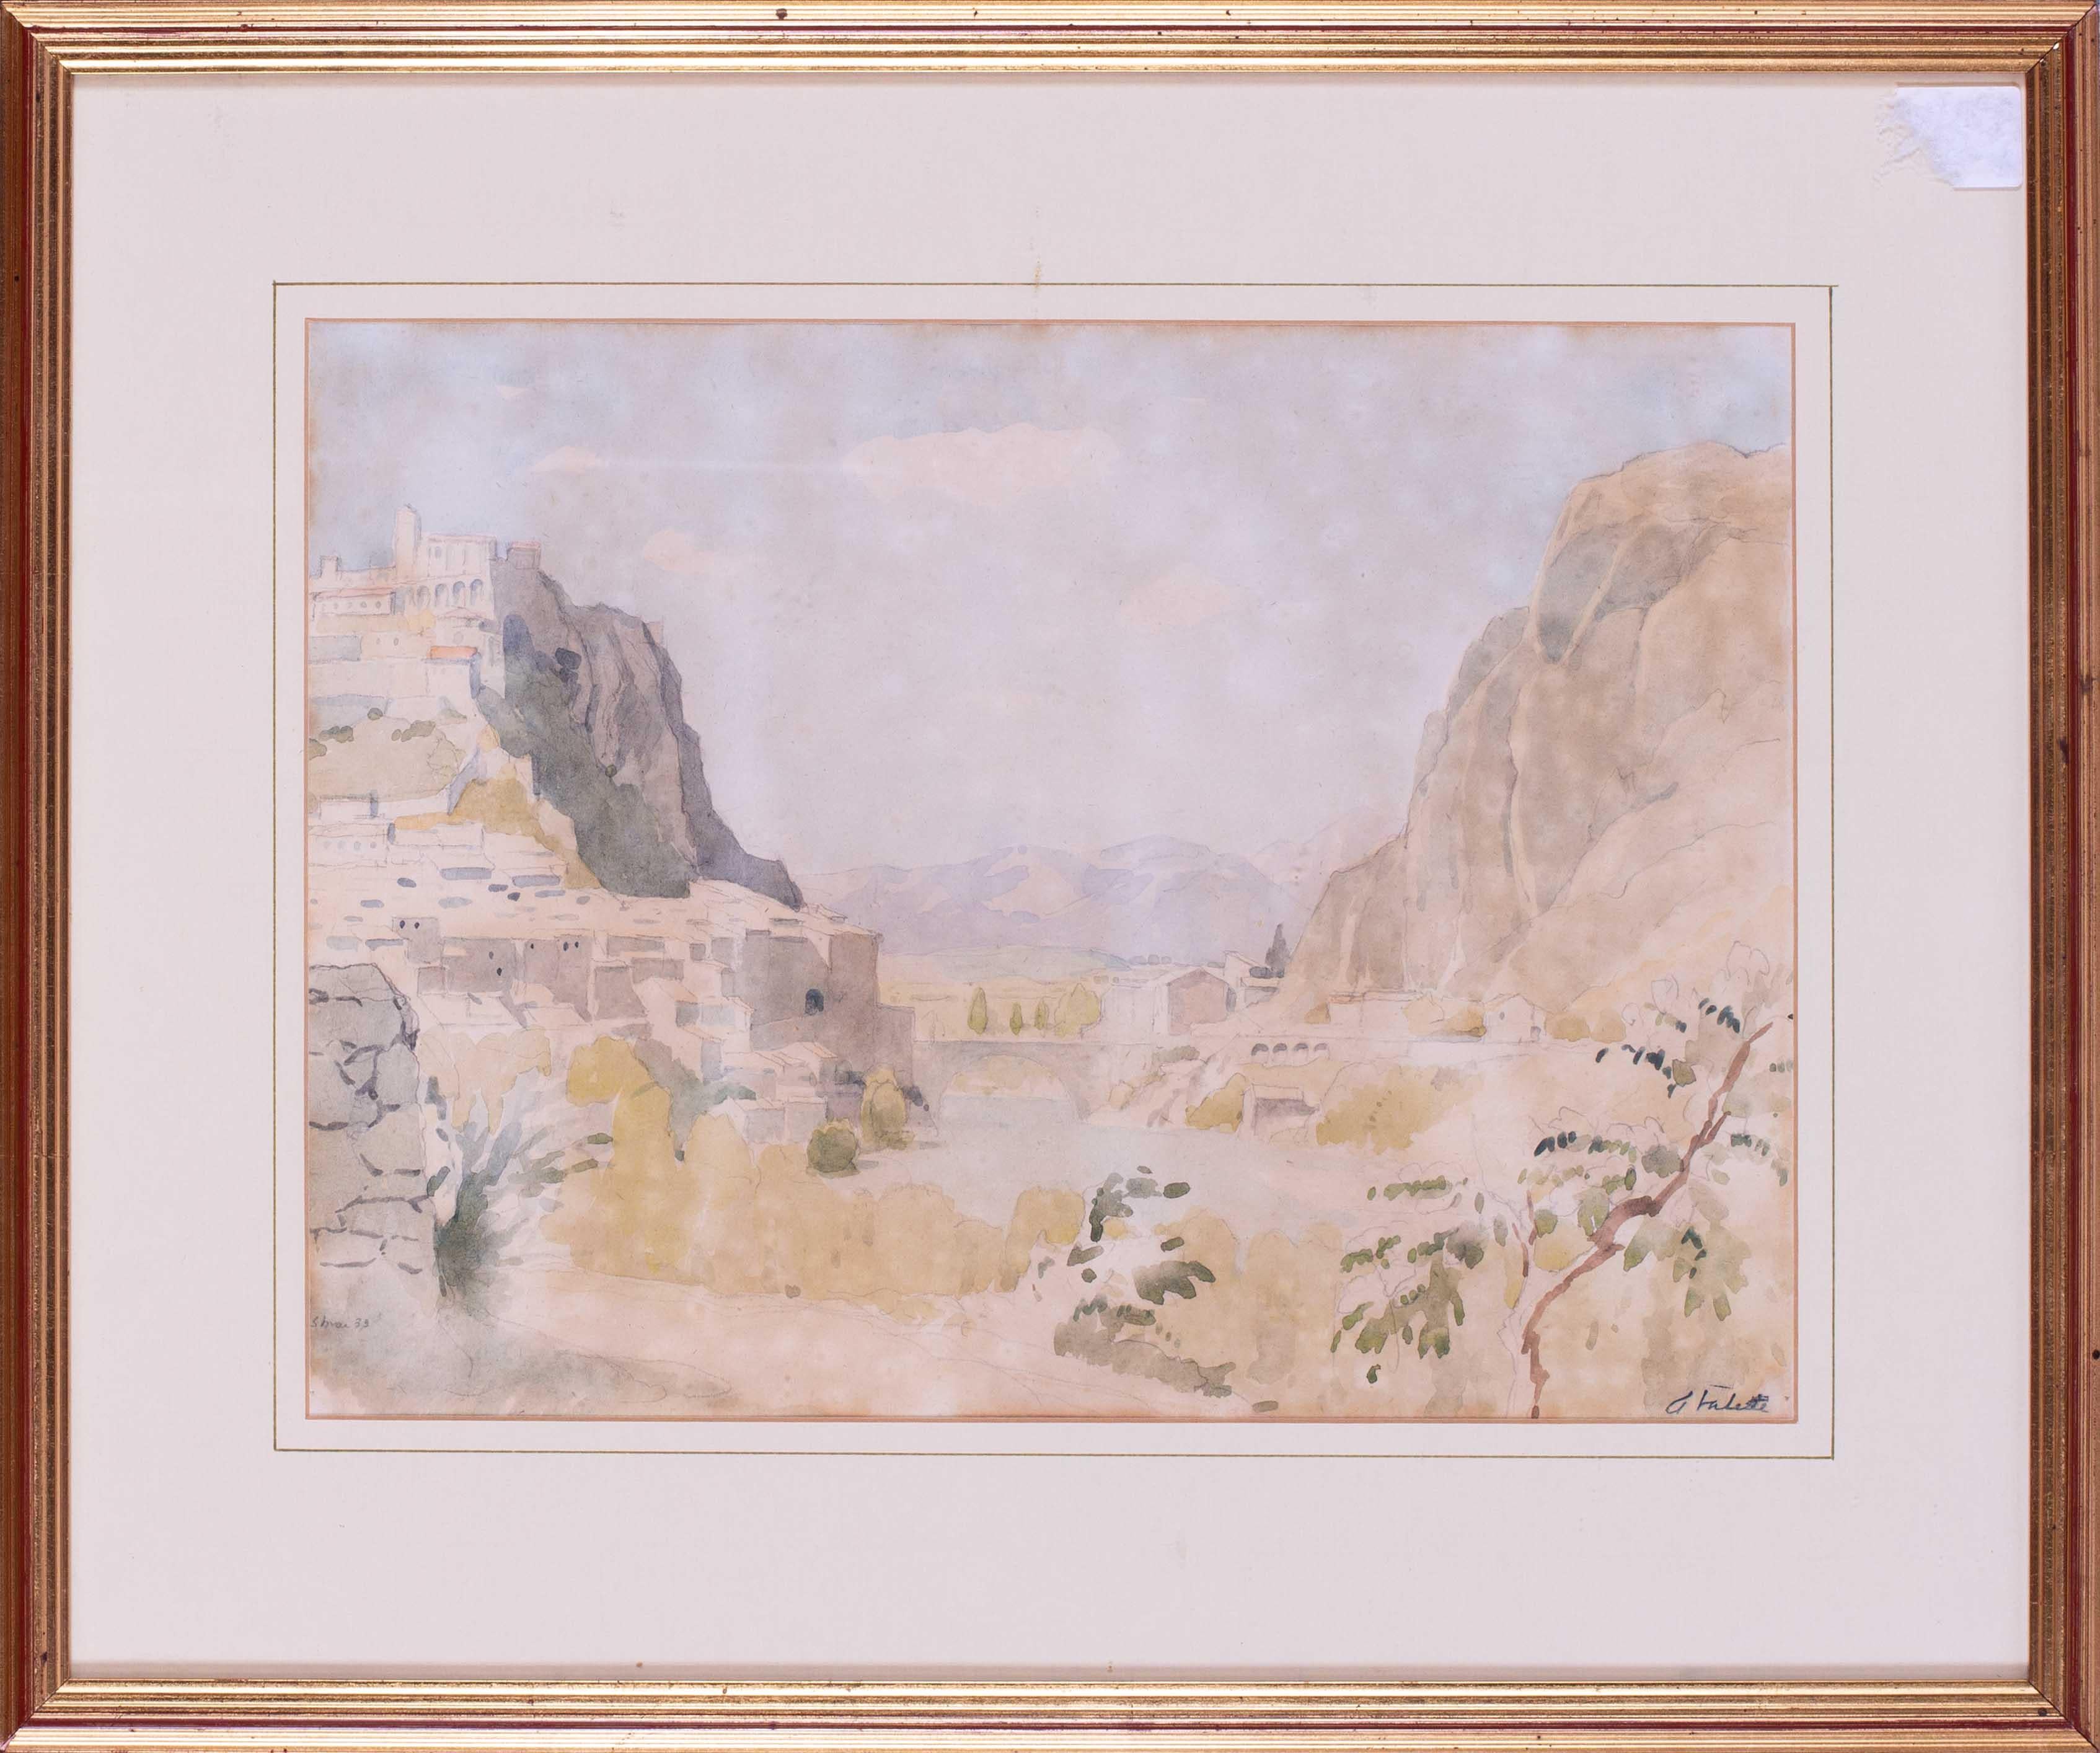 Pierre Adolphe Valette Landscape Art - 20th Century French Impressionist watercolour painting of Vaison-la-Romaine